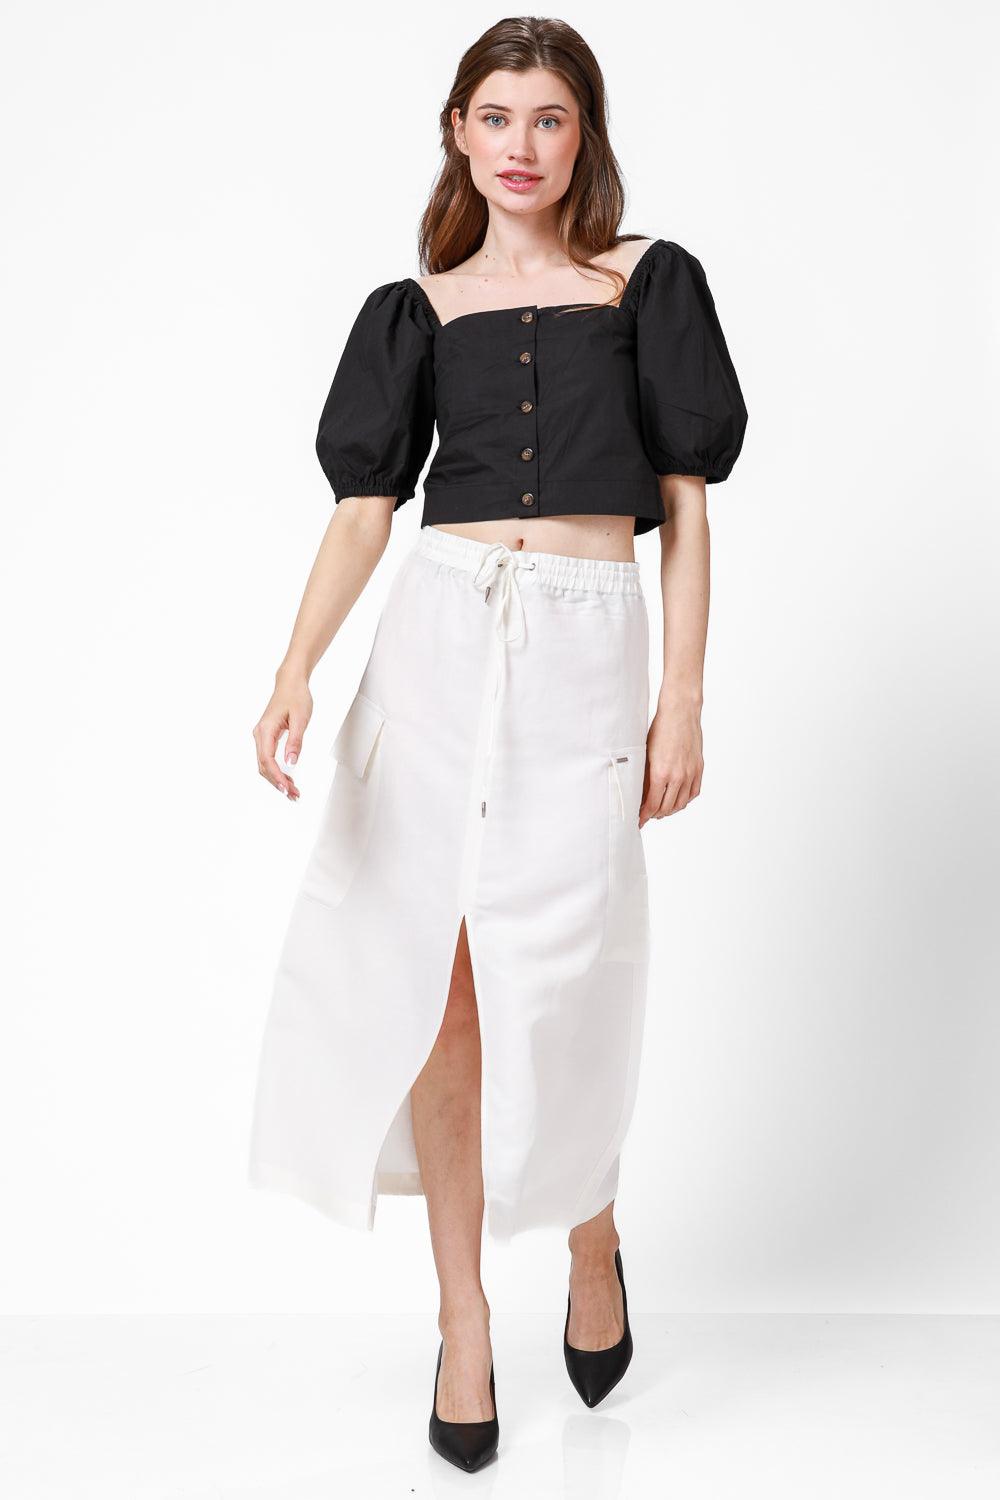 KENNETH COLE - חצאית פשתן בצבע לבן - MASHBIR//365